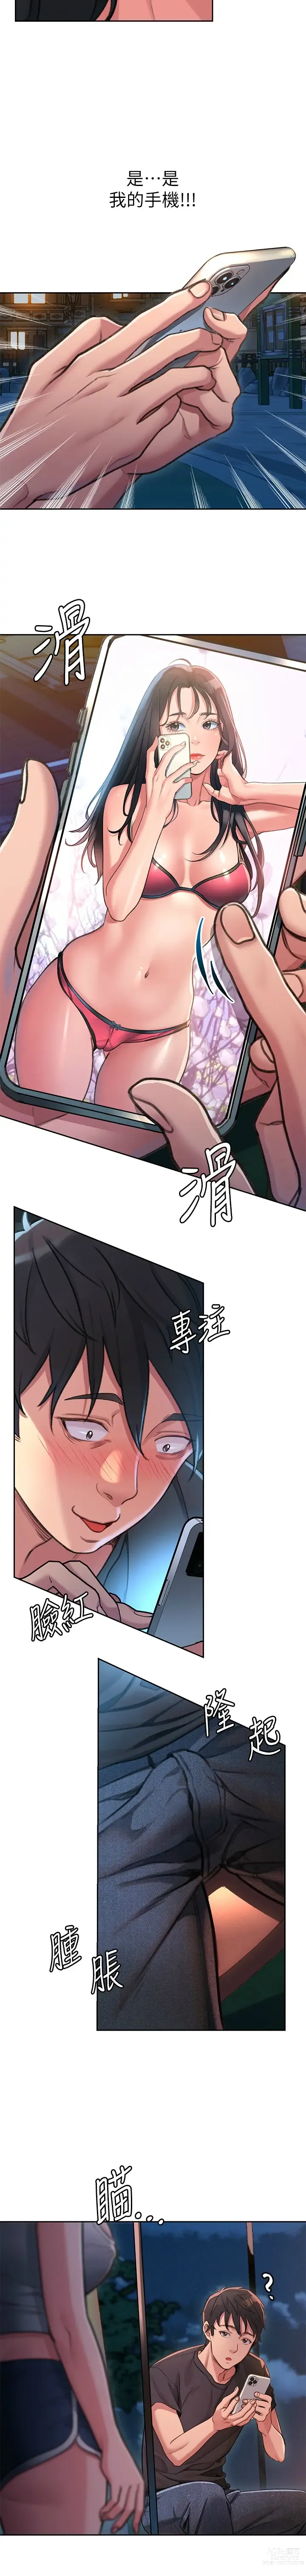 Page 5 of manga 请滑入解锁／Unlock Her Heart